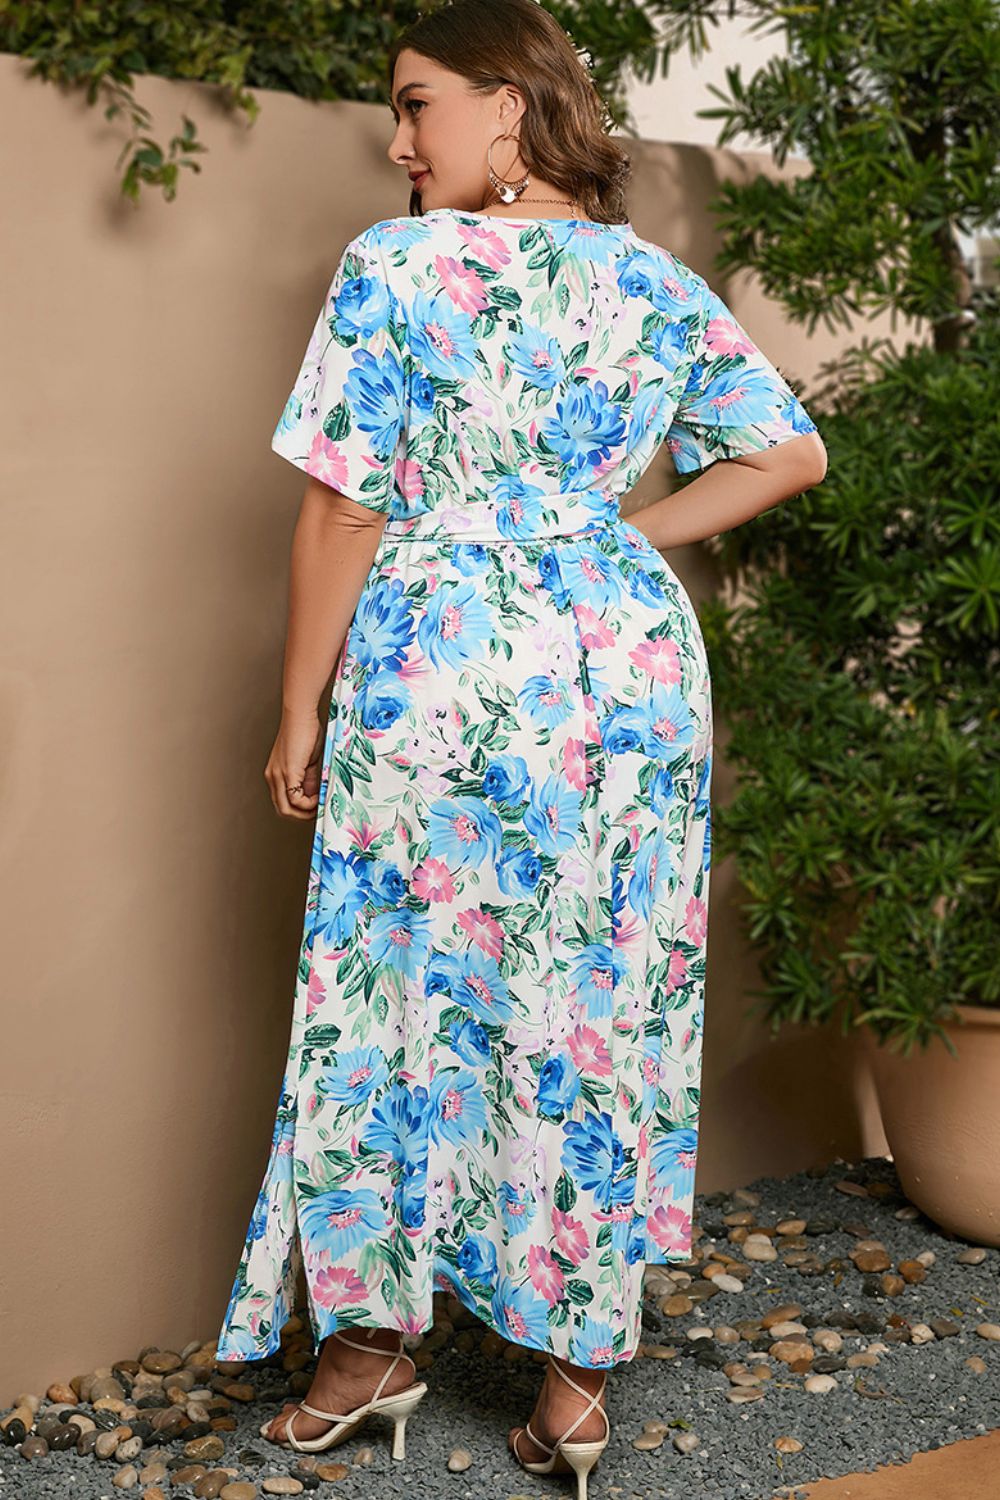 Elegant Plus Size Beach Wedding Guest Dress - Tied Surplice Short Sleeve Maxi for Perfect Summer Celebrations